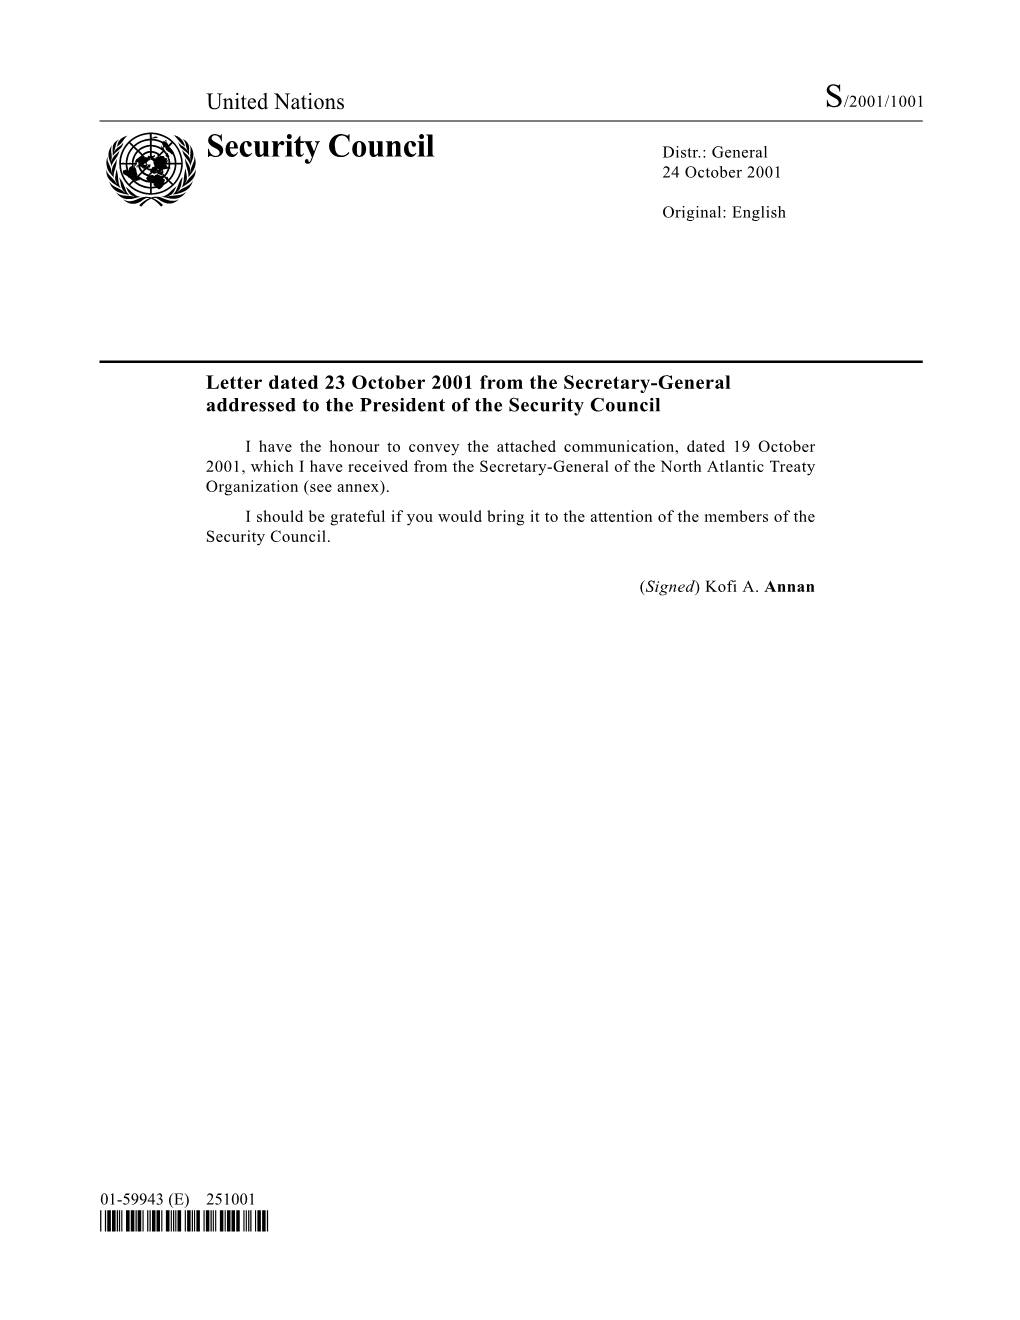 Security Council Distr.: General 24 October 2001